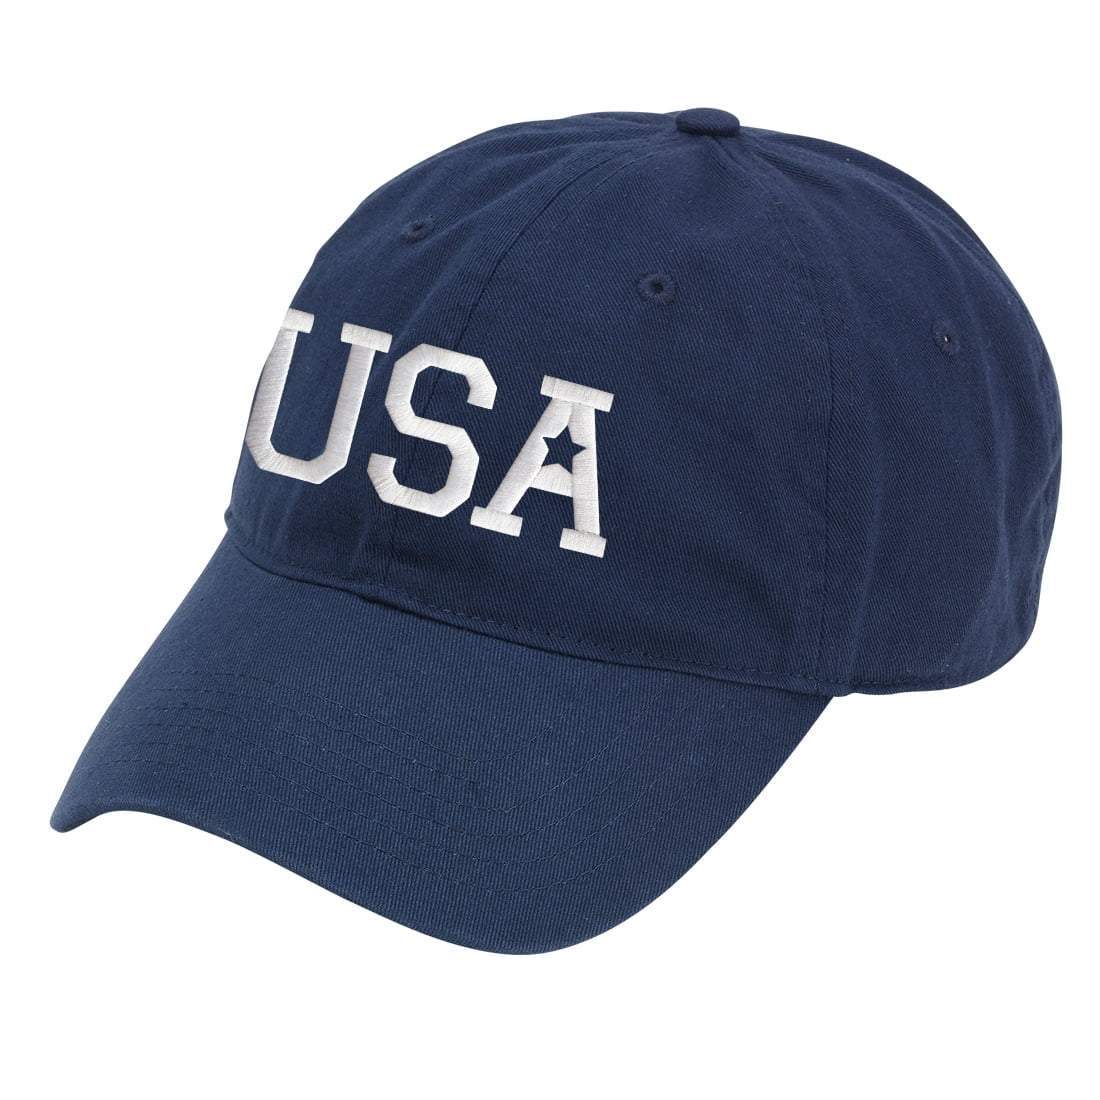 USA Navy Cap